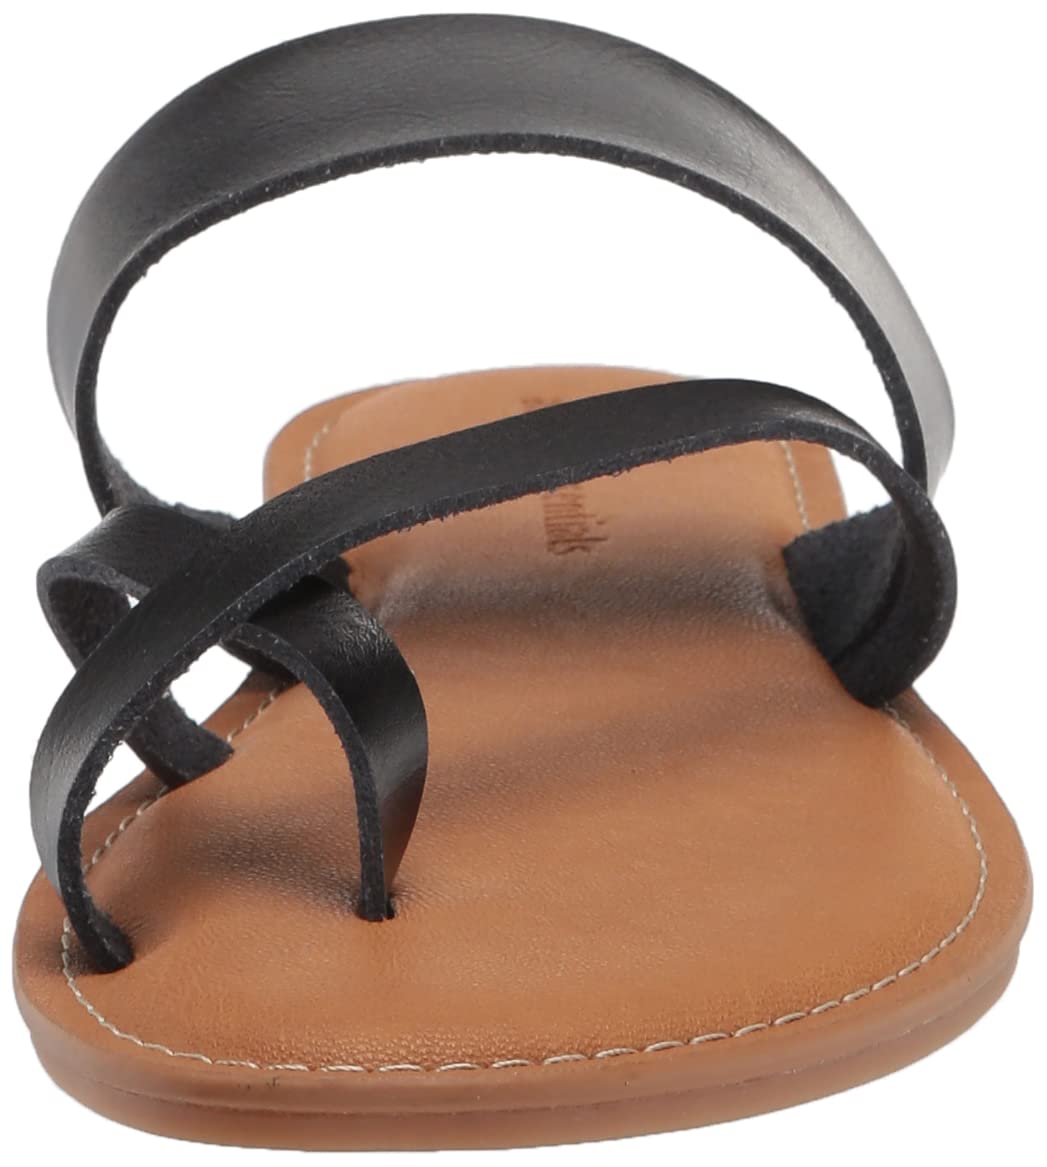 Amazon Essentials Women's One Band Flip Flop Sandal